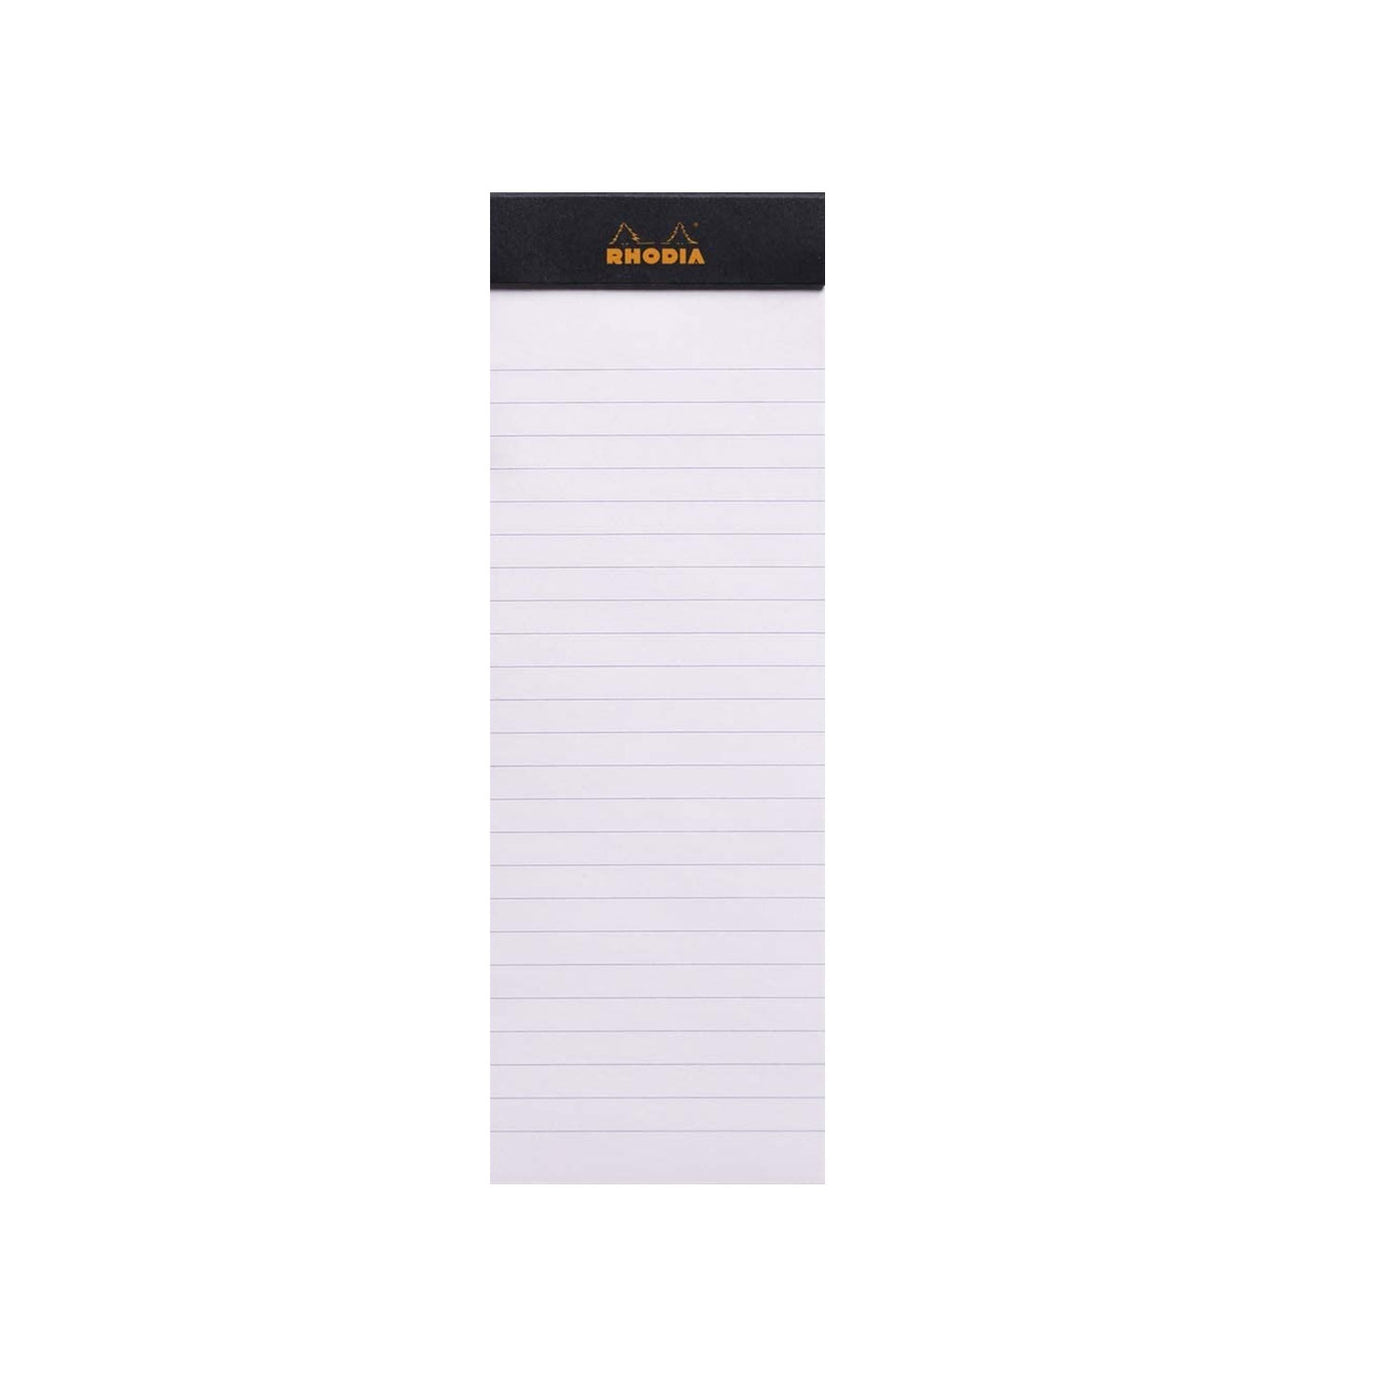 Rhodia No.8 Black Notepad - Ruled 2